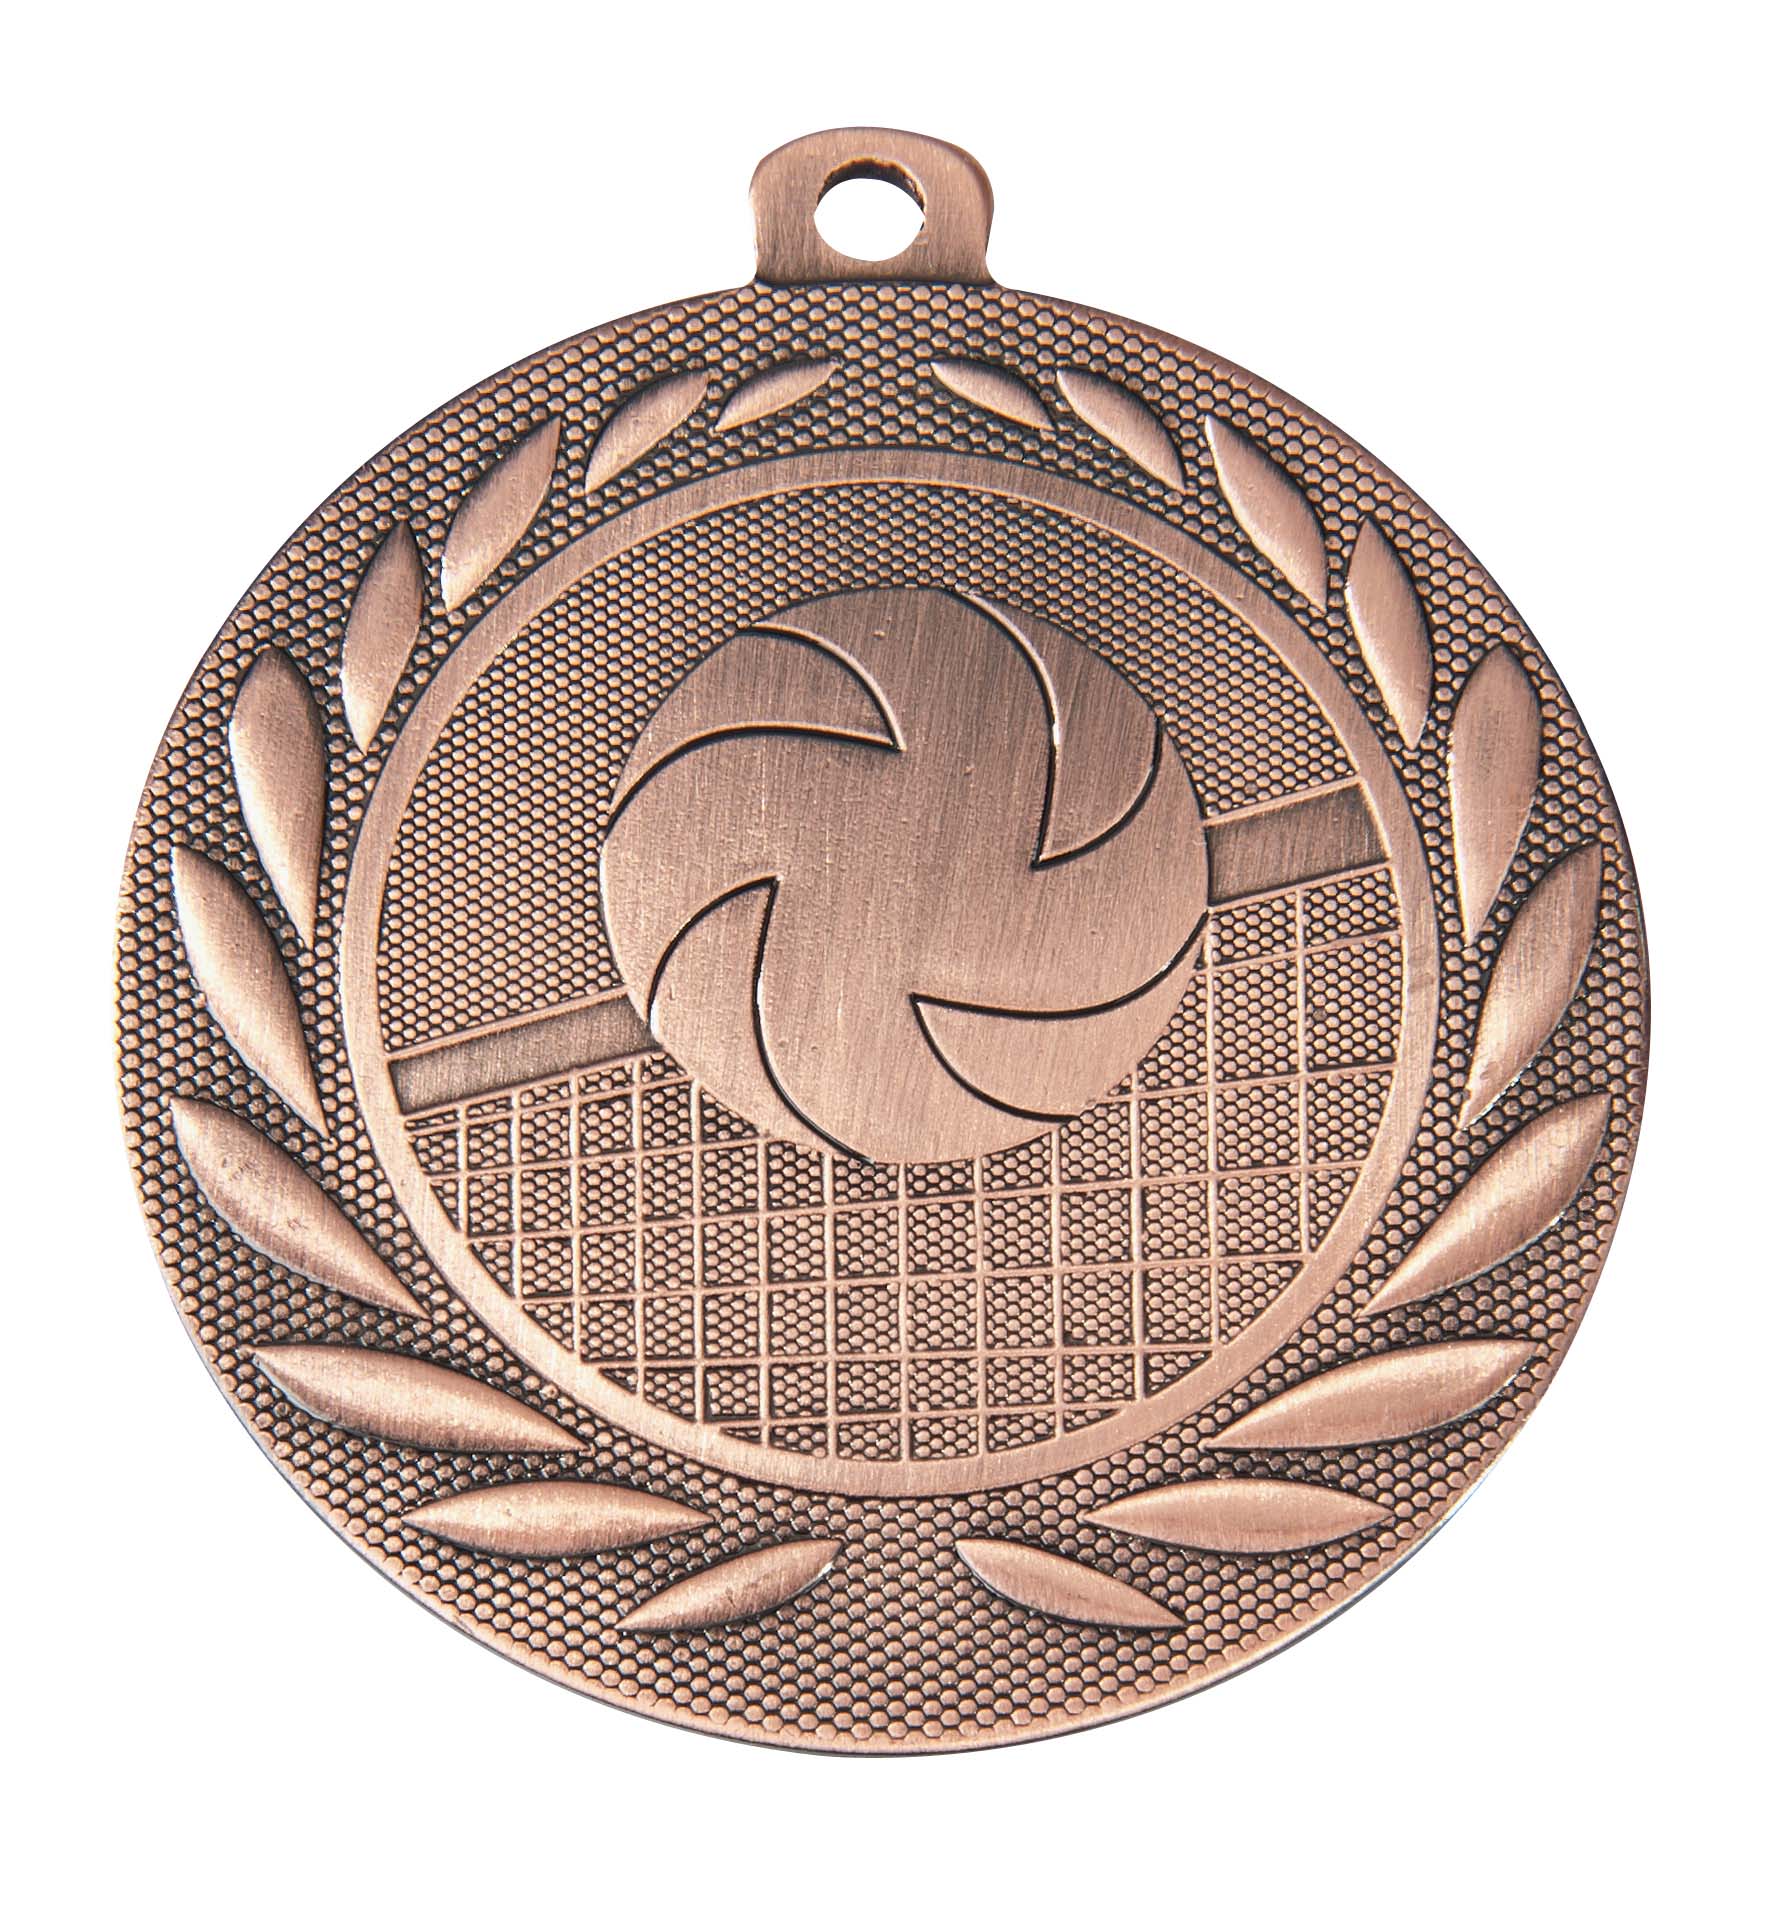 Volleyball-Medaille DI5000N inkl. Band und Beschriftung Bronze Unmontiert